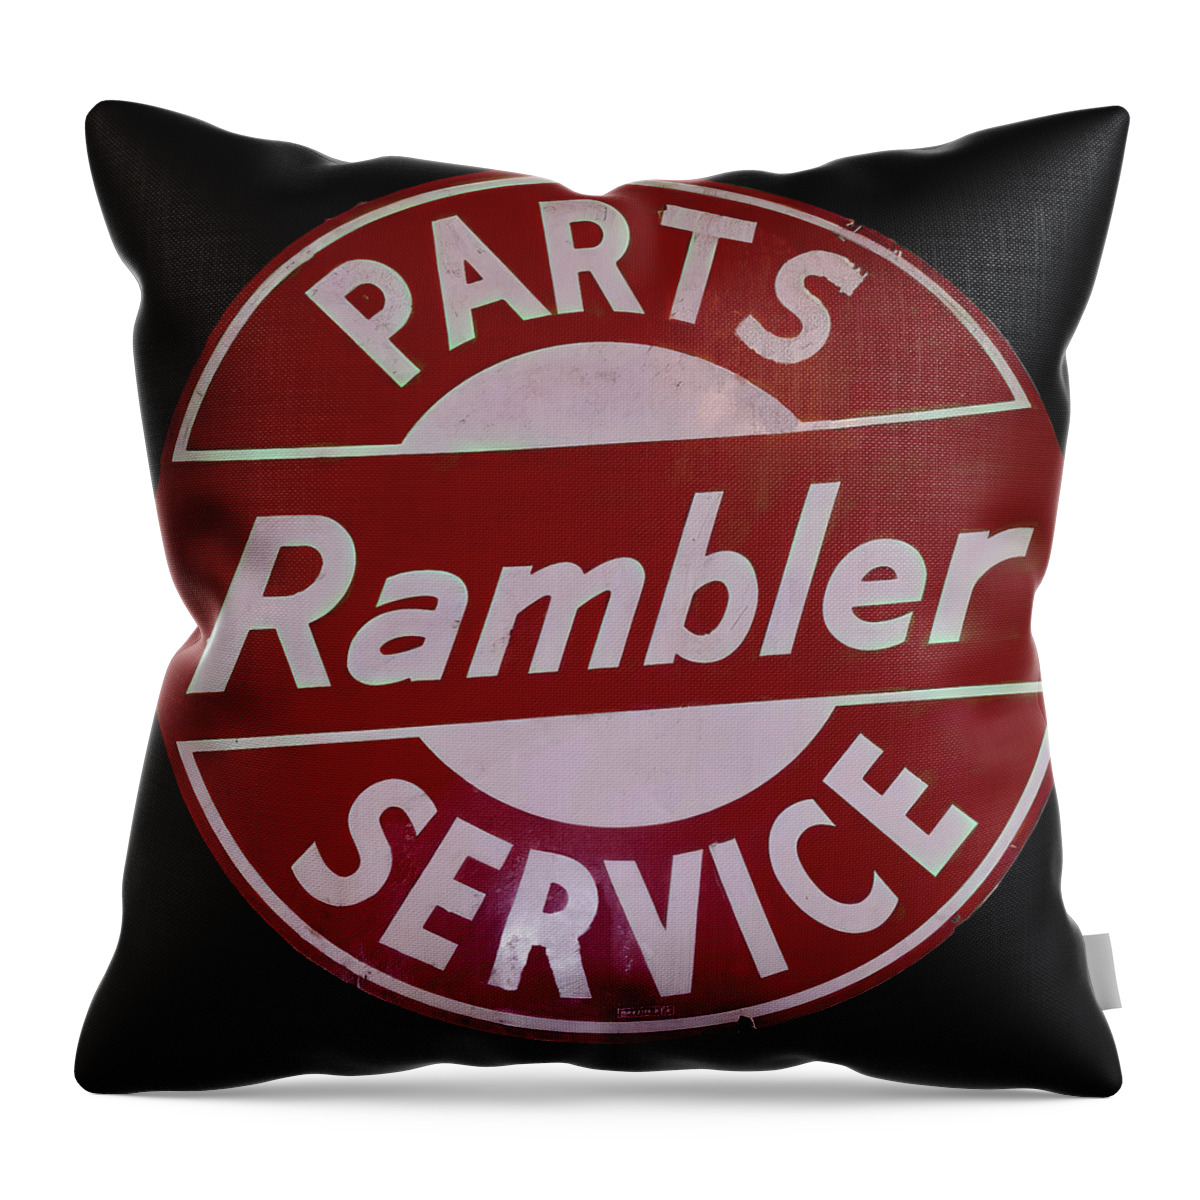 Rambler Throw Pillow featuring the photograph Rambler service vintage sign by Flees Photos